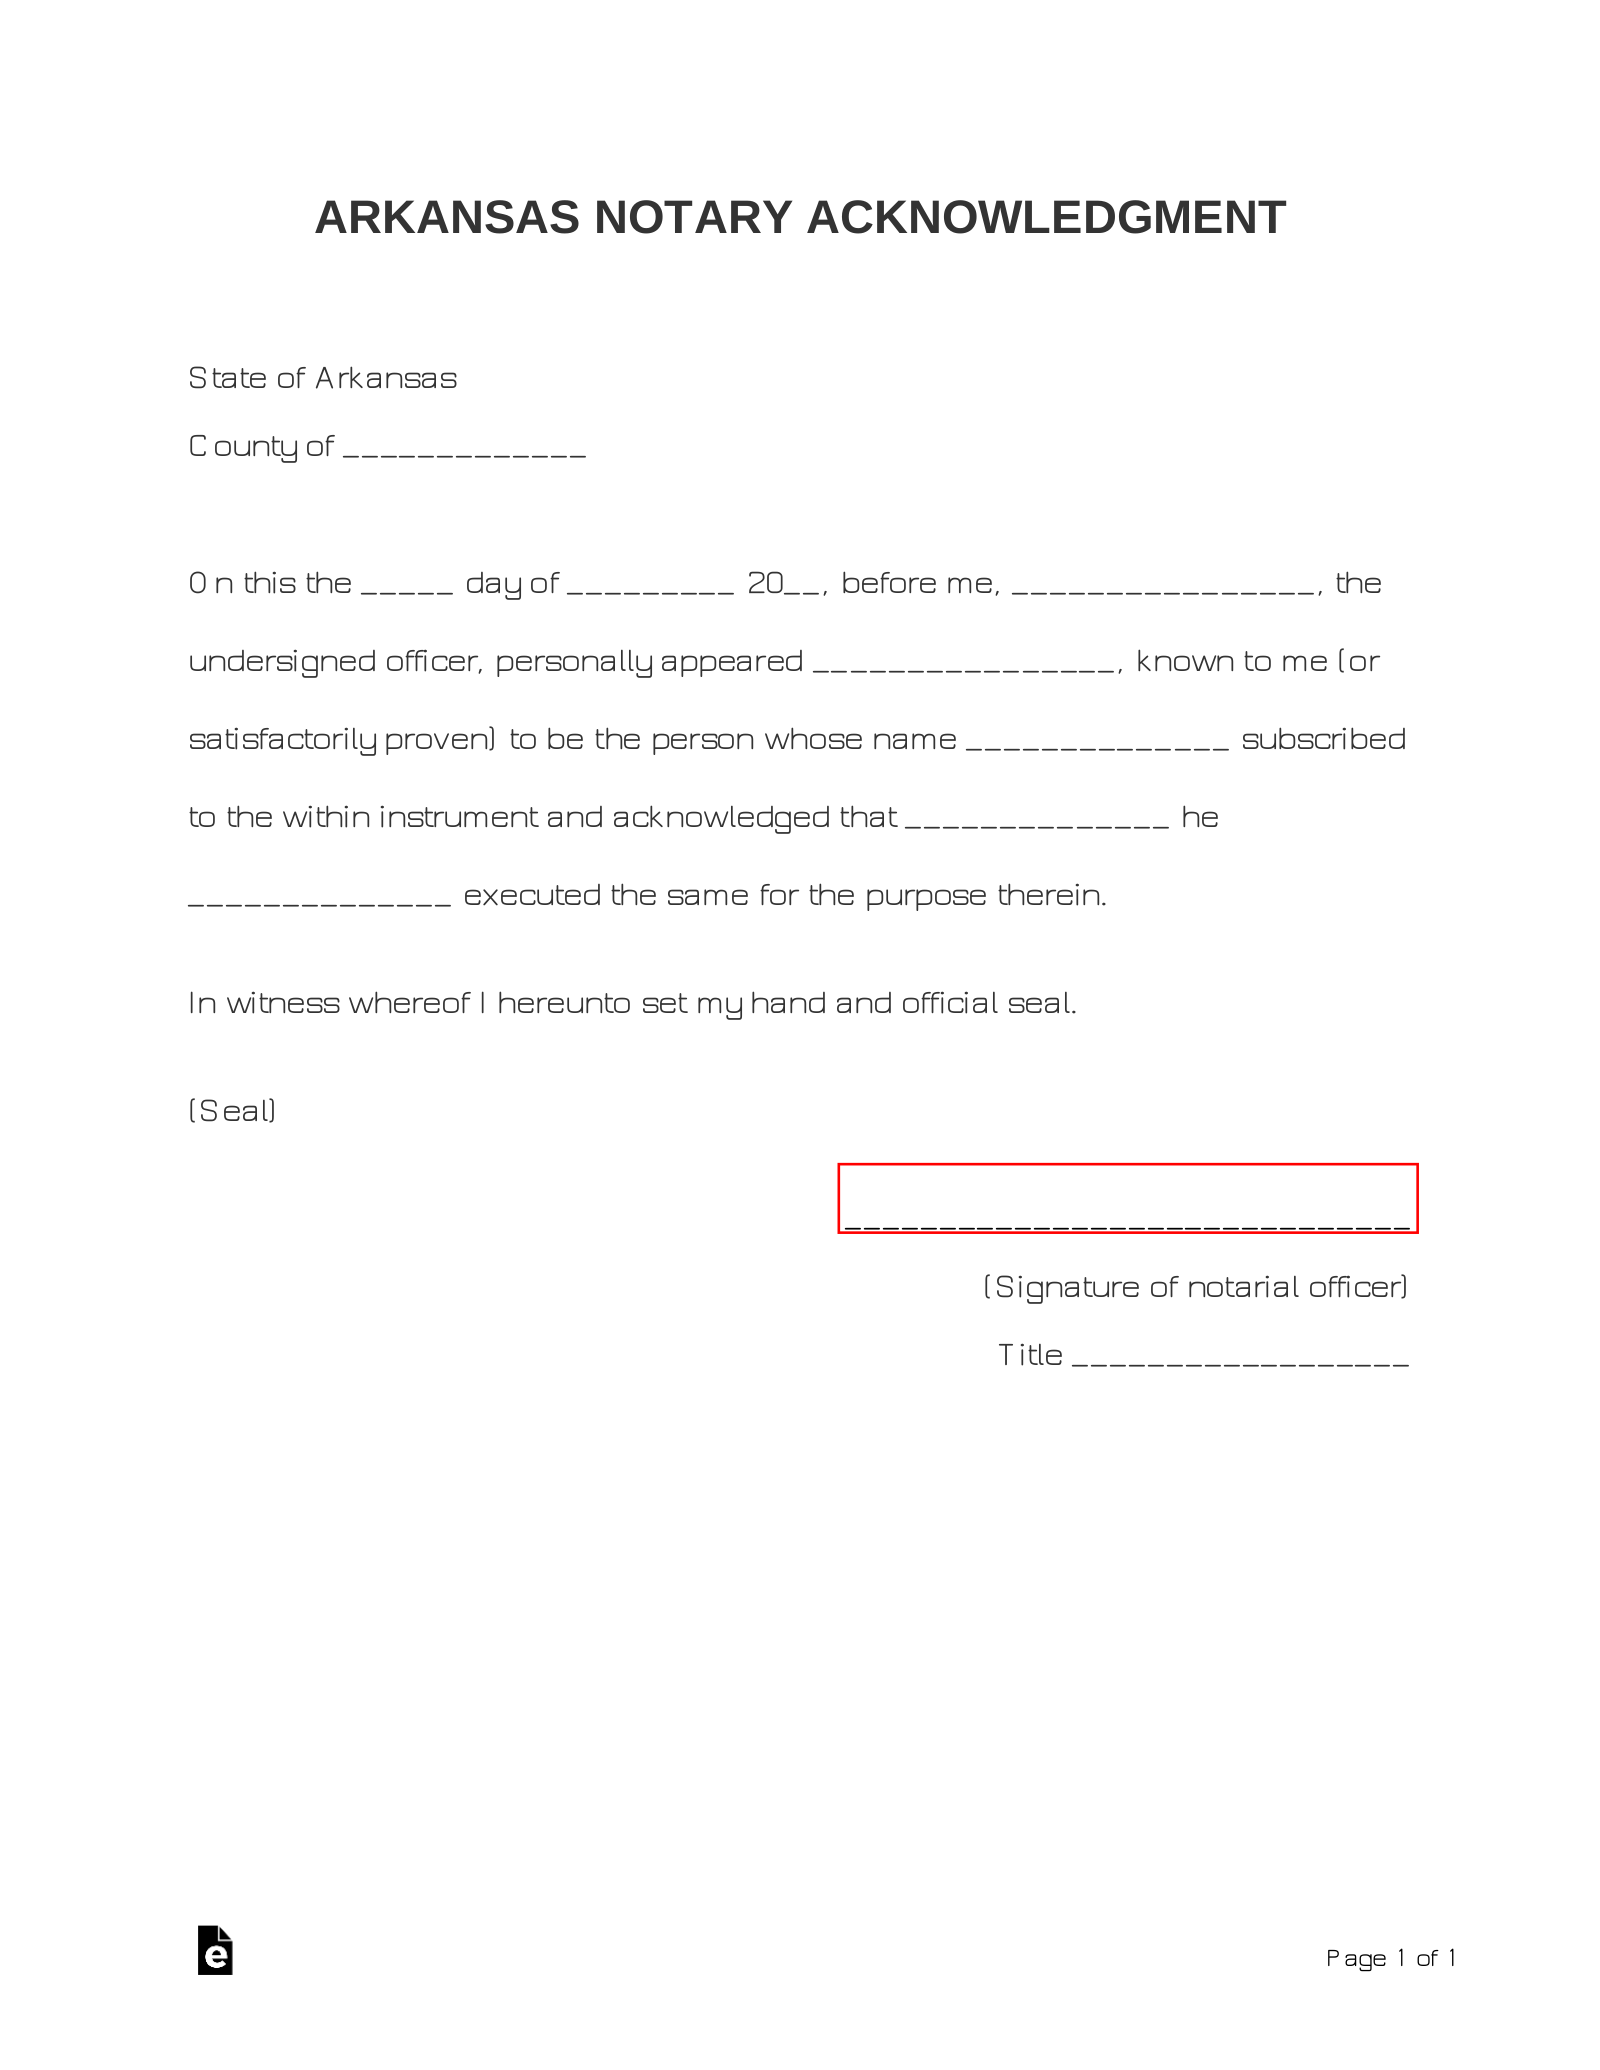 Arkansas Notary Acknowledgment Form